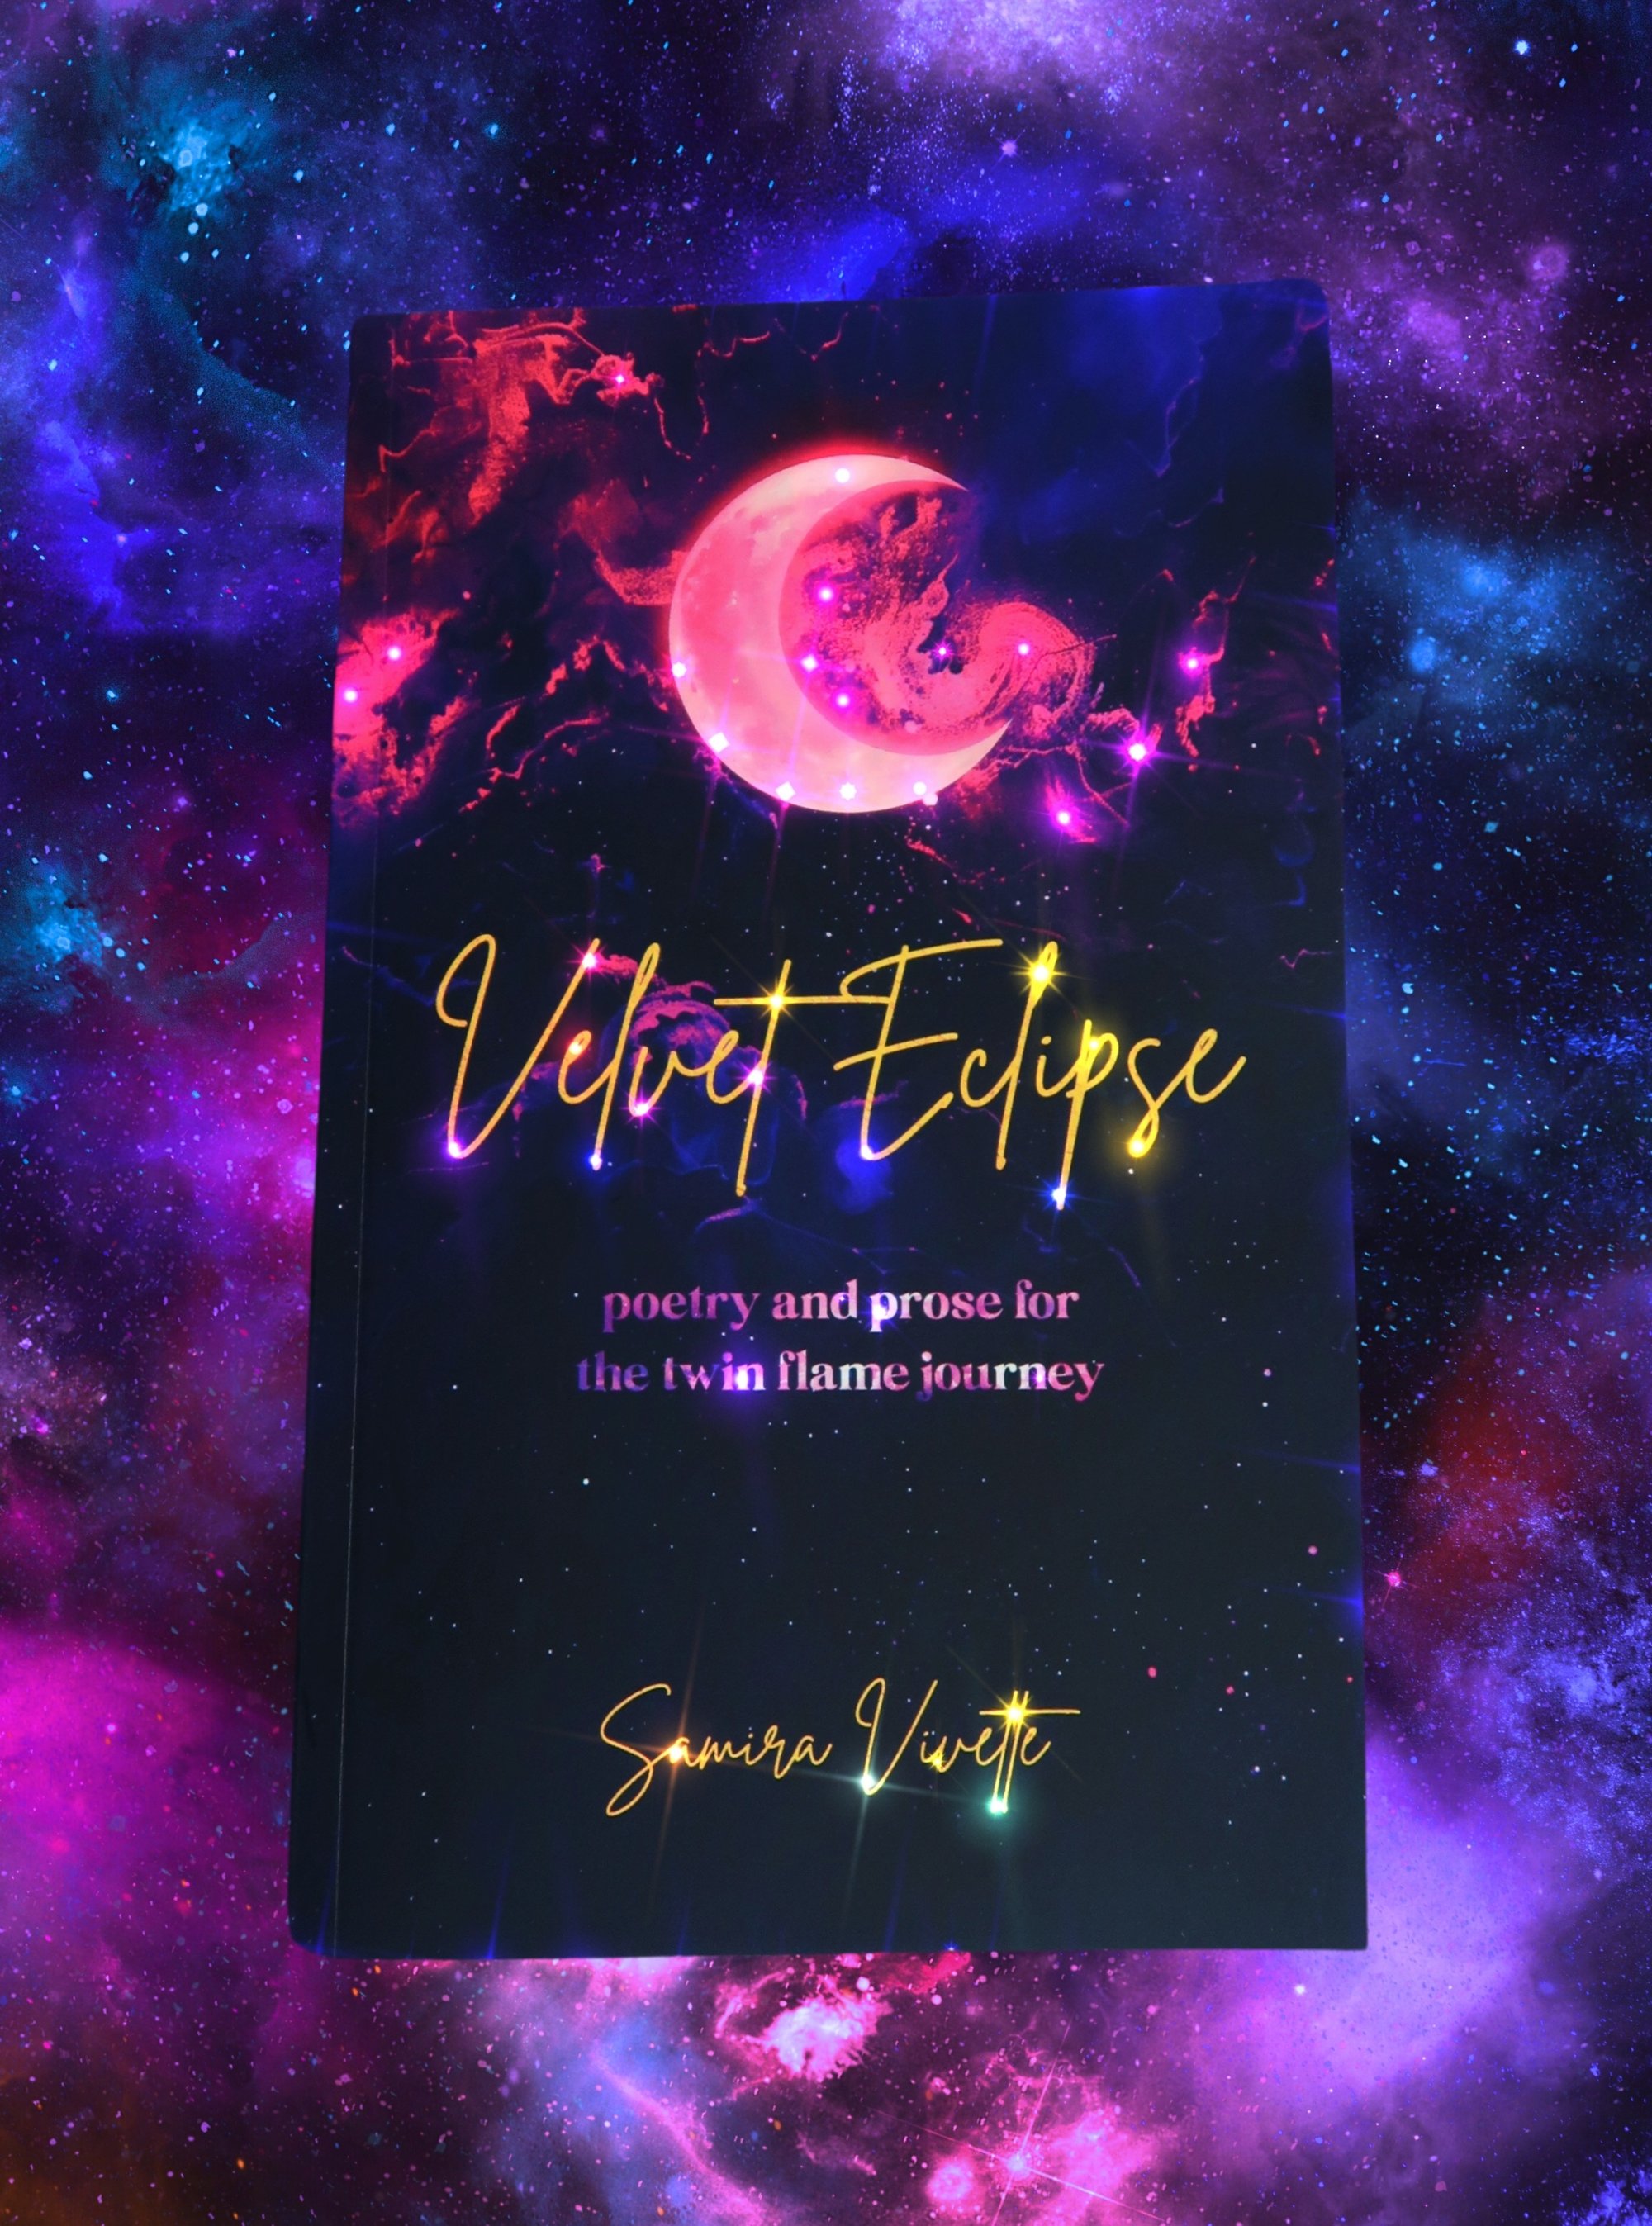 "Velvet Eclipse" Signed Copy